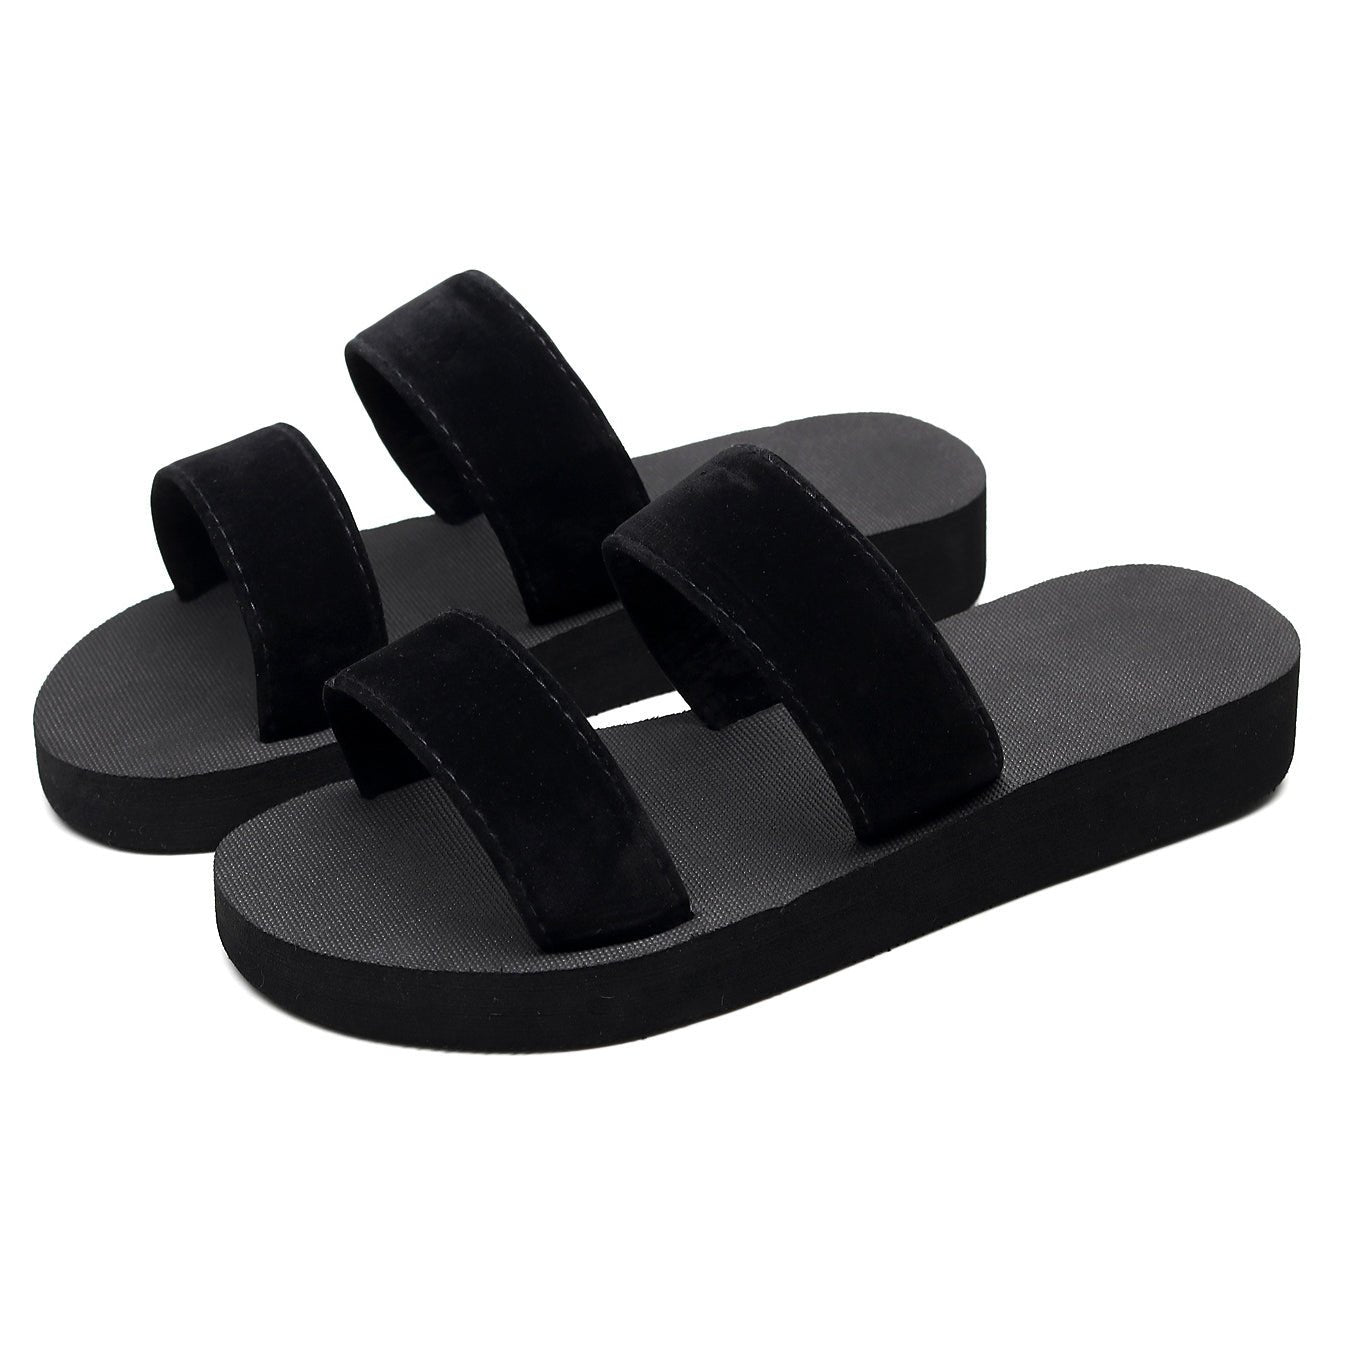 Velvet Straps Slippers - Boots BootiesShoesFlat Sandalsladies sandalsnon slip shoes